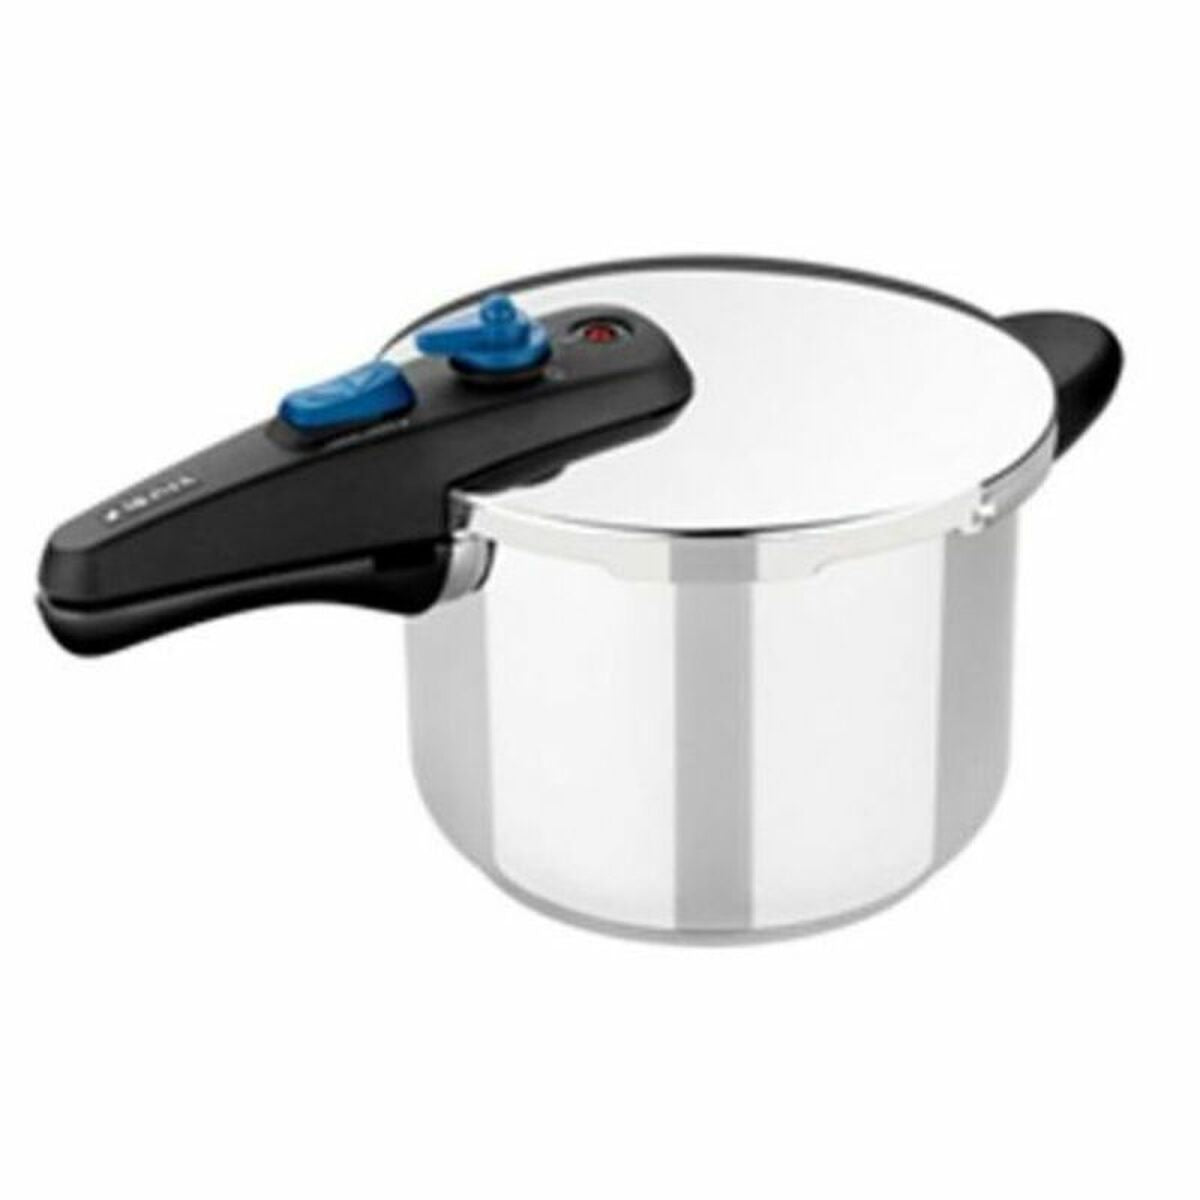 Pressure cooker Monix M570003 7 L Stainless steel 7 L